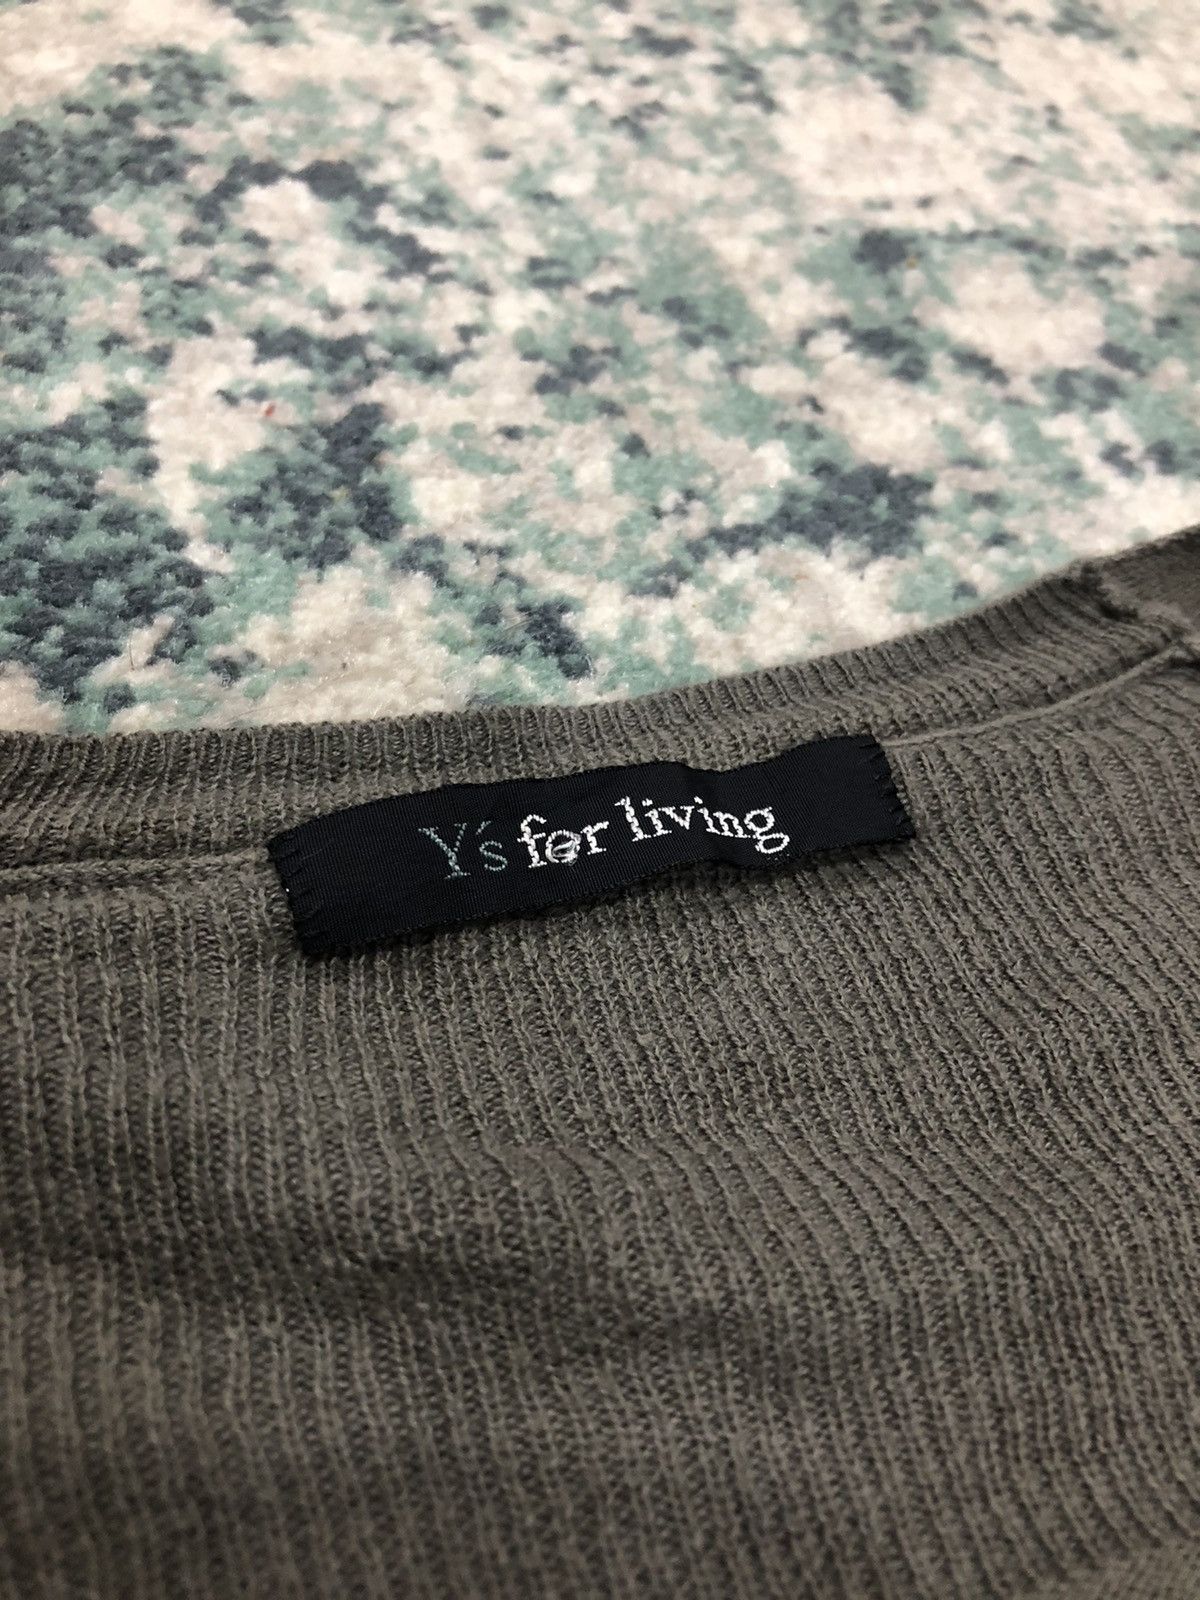 Ys for Living Cardigan Button Ups Kniterar Sweater - 4